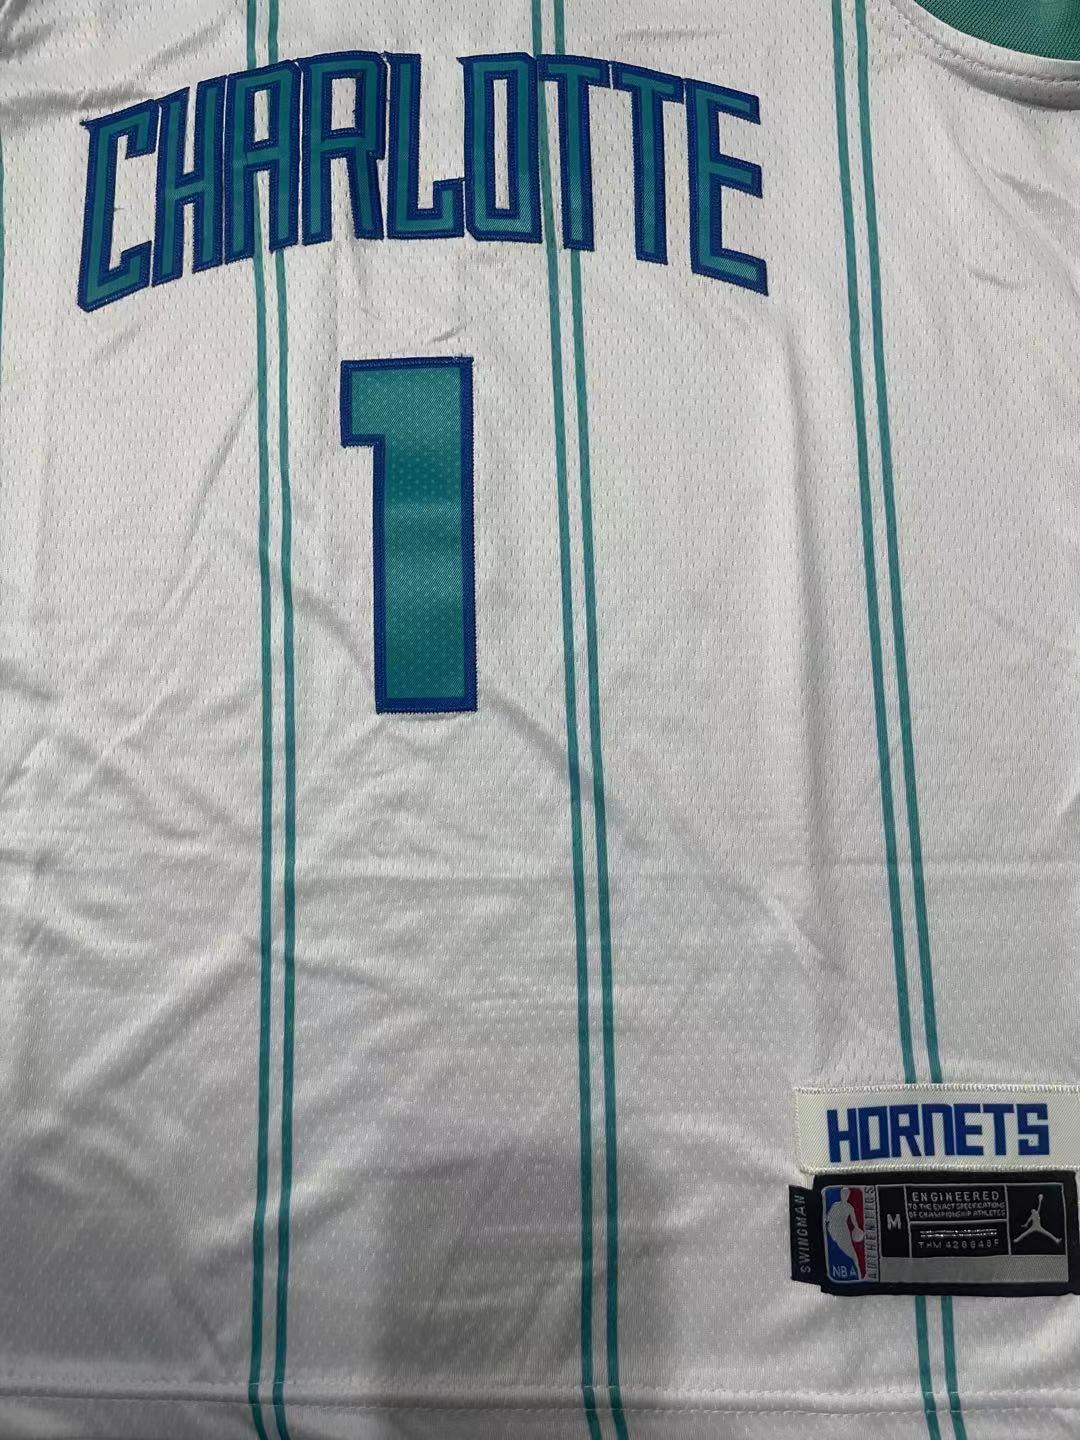 Charlotte Hornets Jerseys, Swingman Jersey, Hornets City Edition Jerseys